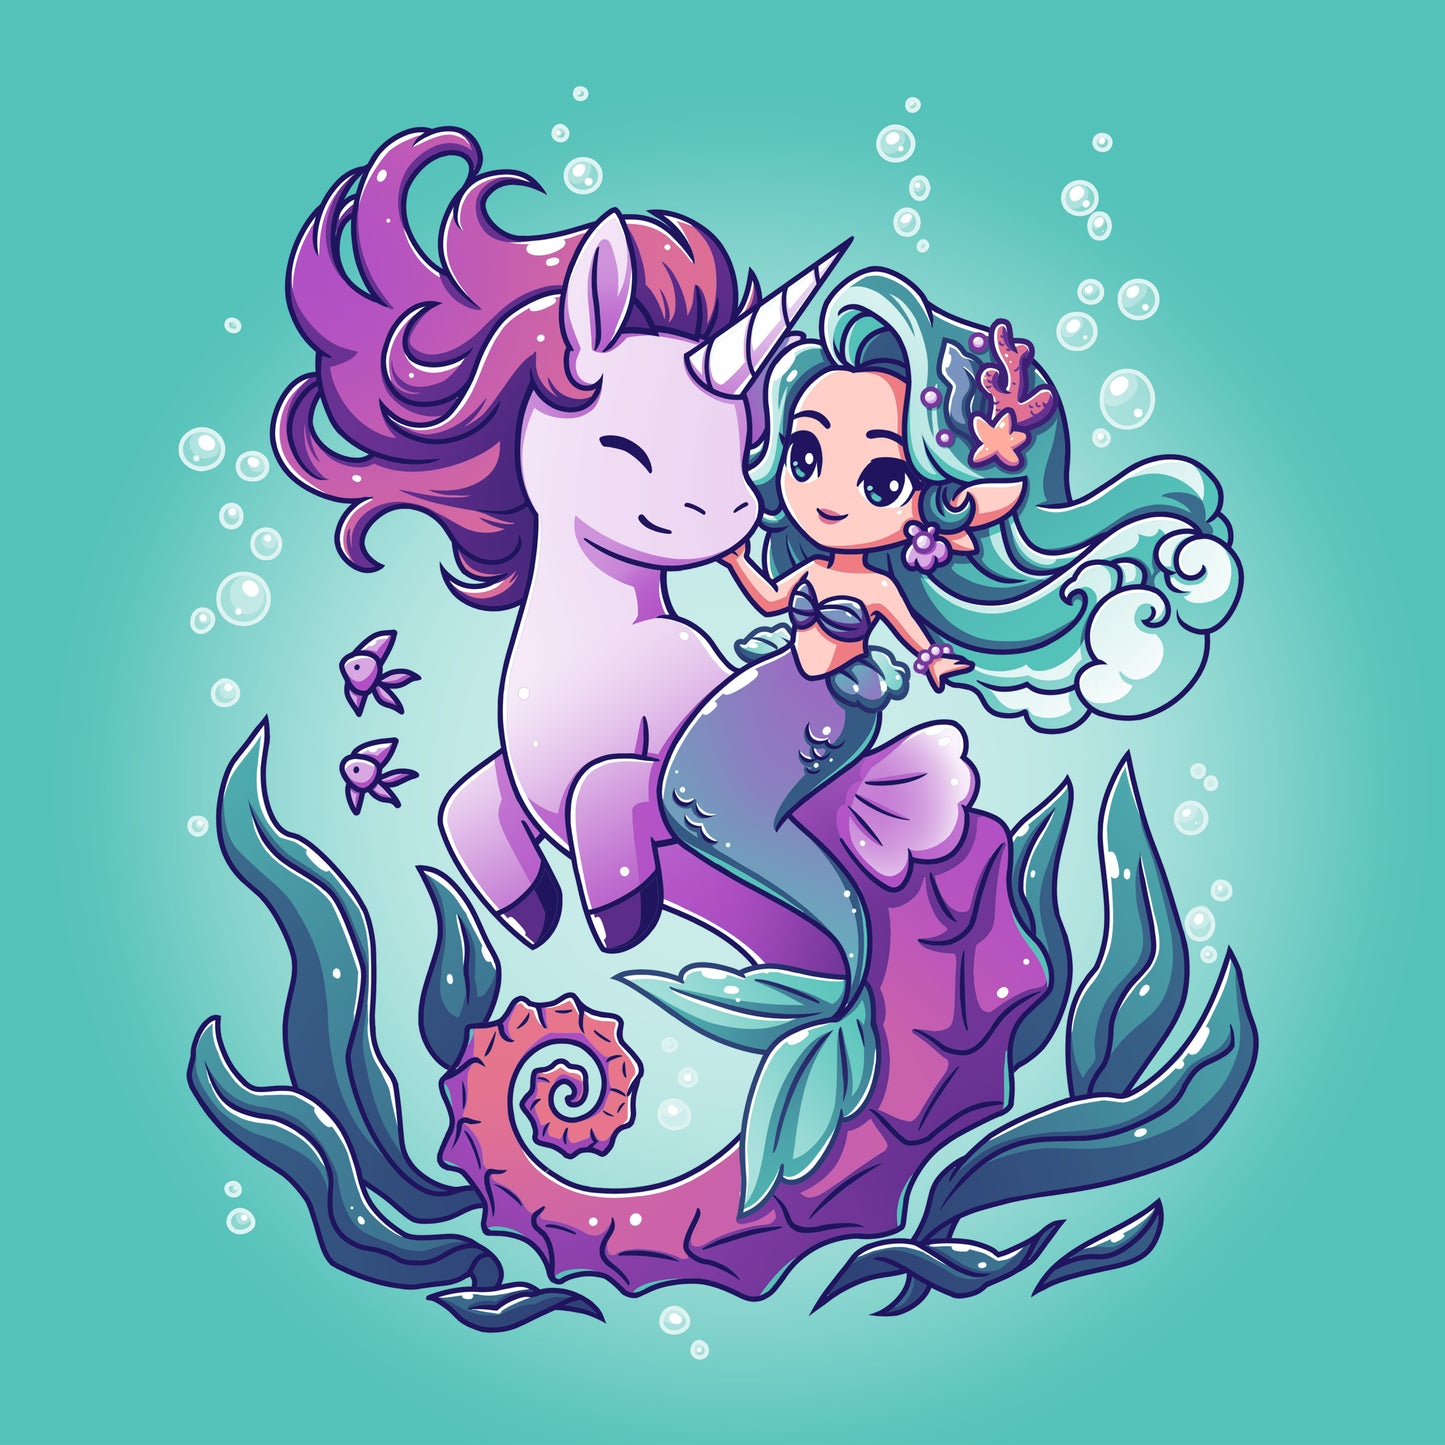 BFFs (Sea Unicorn and Mermaid), best friends, embark on a TeeTurtle undersea ocean adventure.